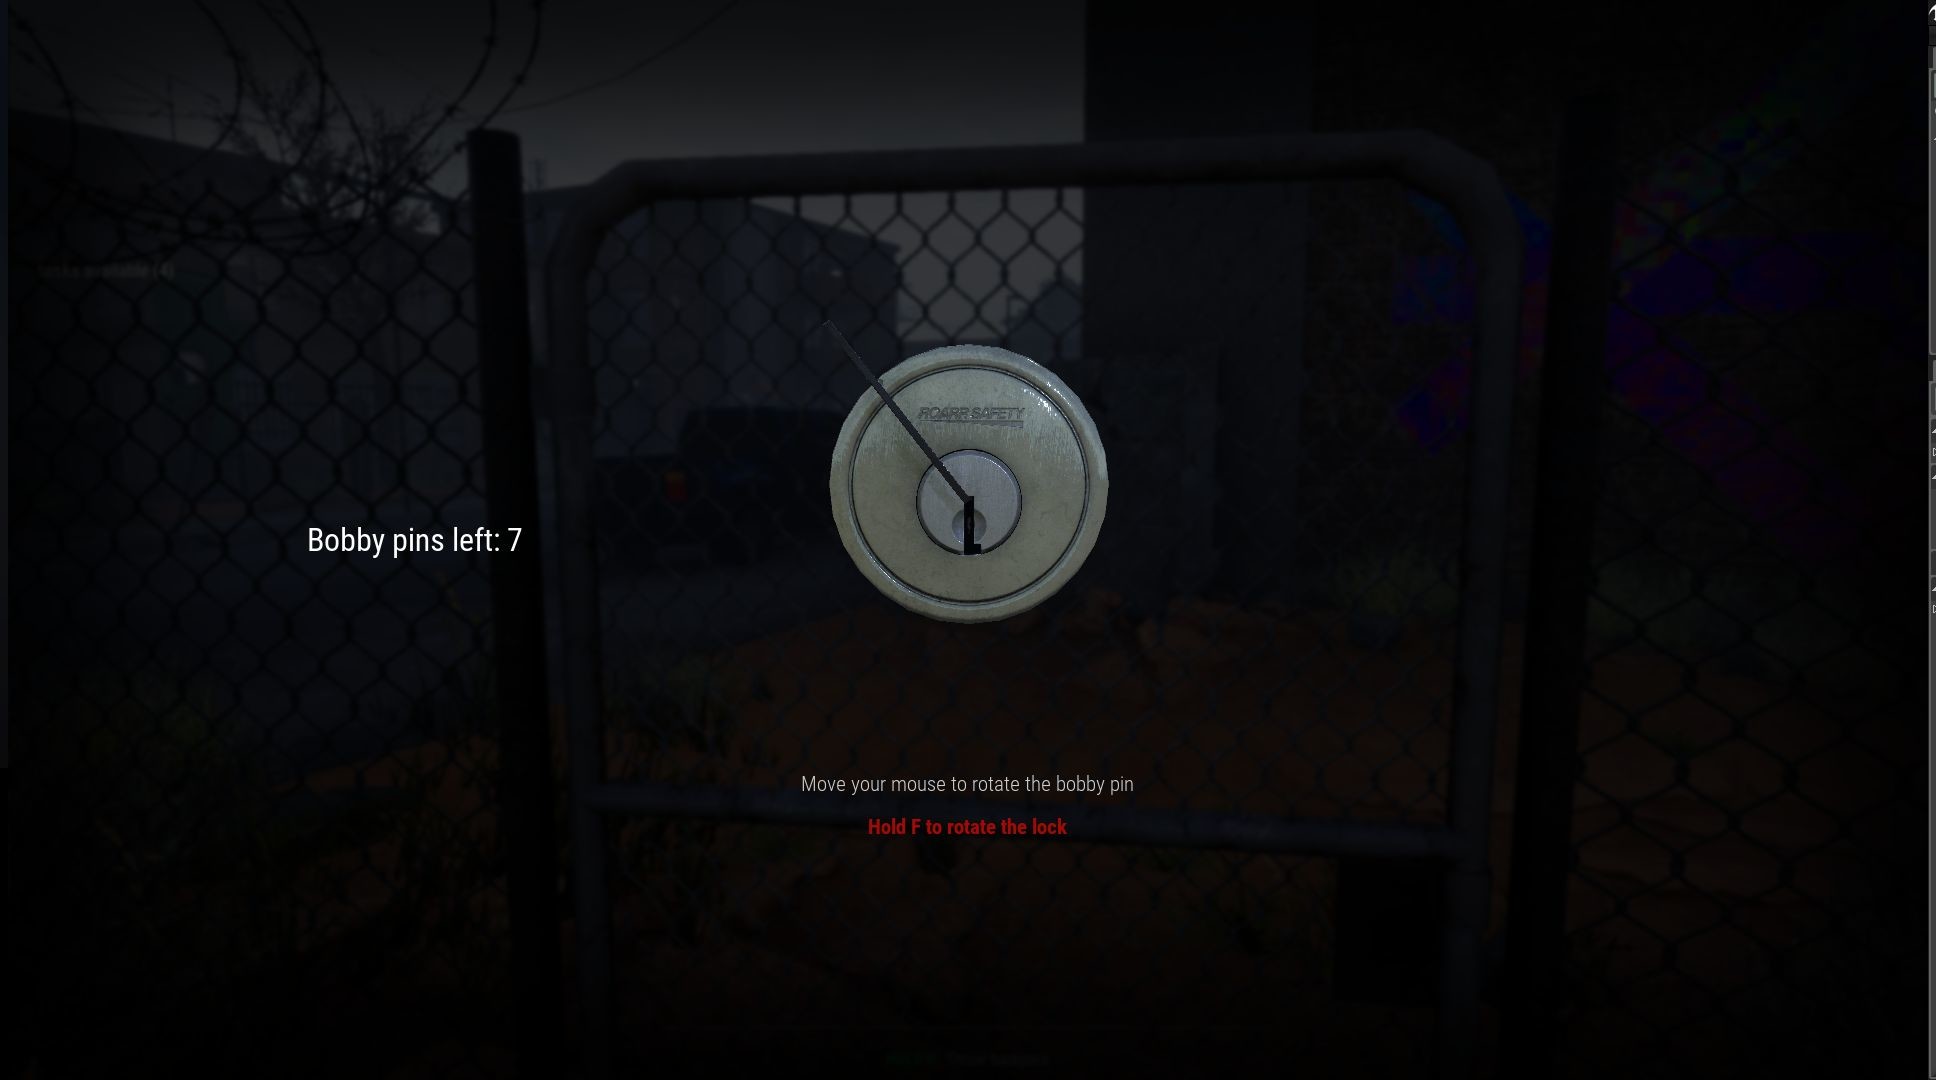 Drug Dealer Simulator screenshot